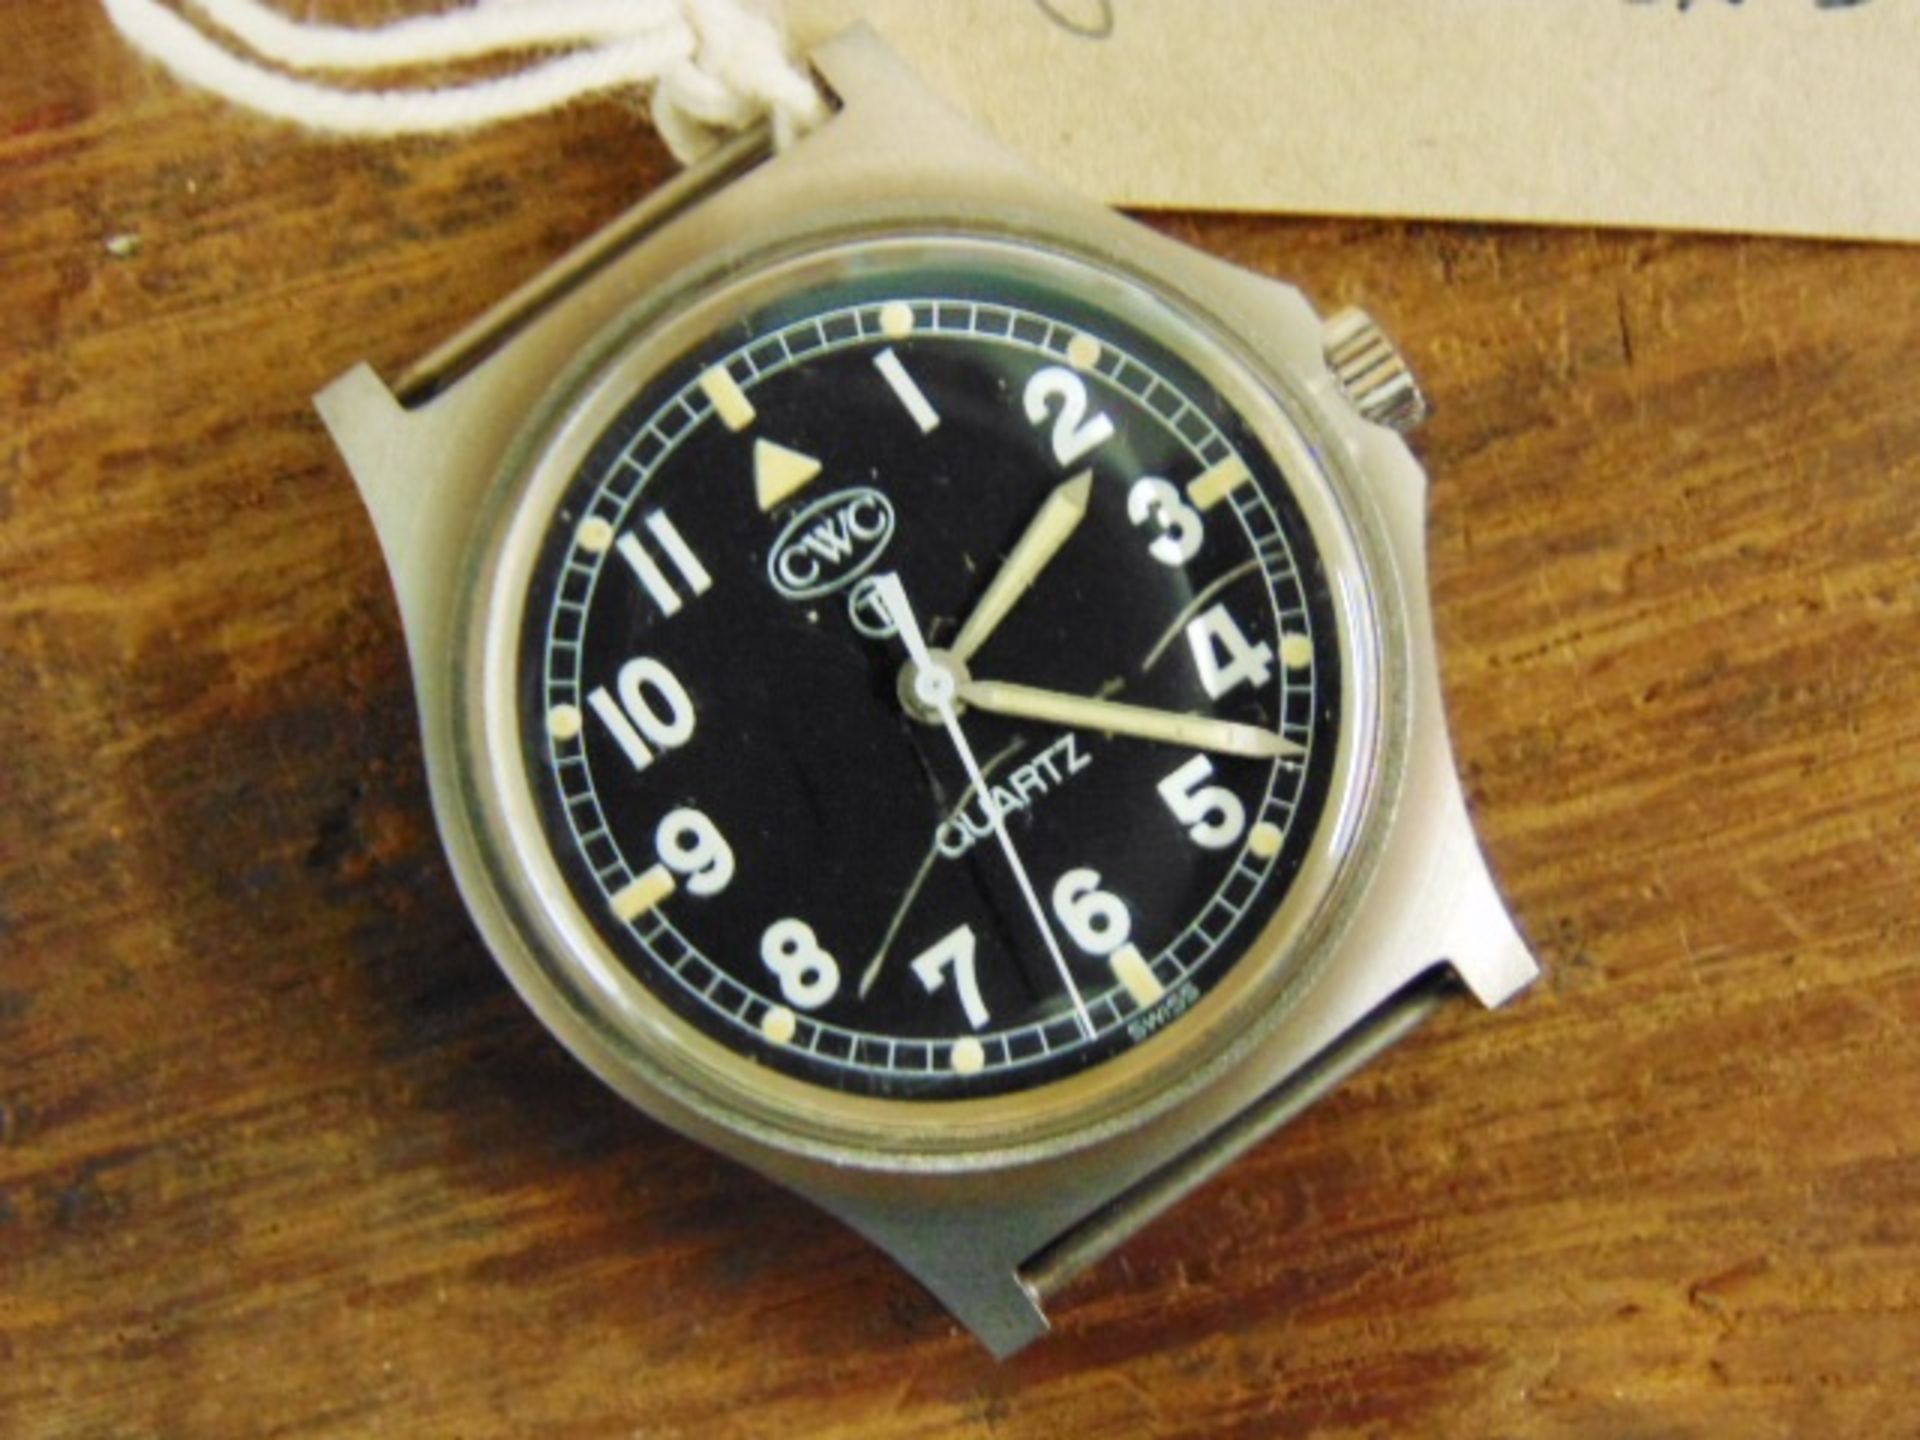 Unissued CWC (Fat Boy/Fat Case) quartz wrist watch with original box - Image 3 of 5